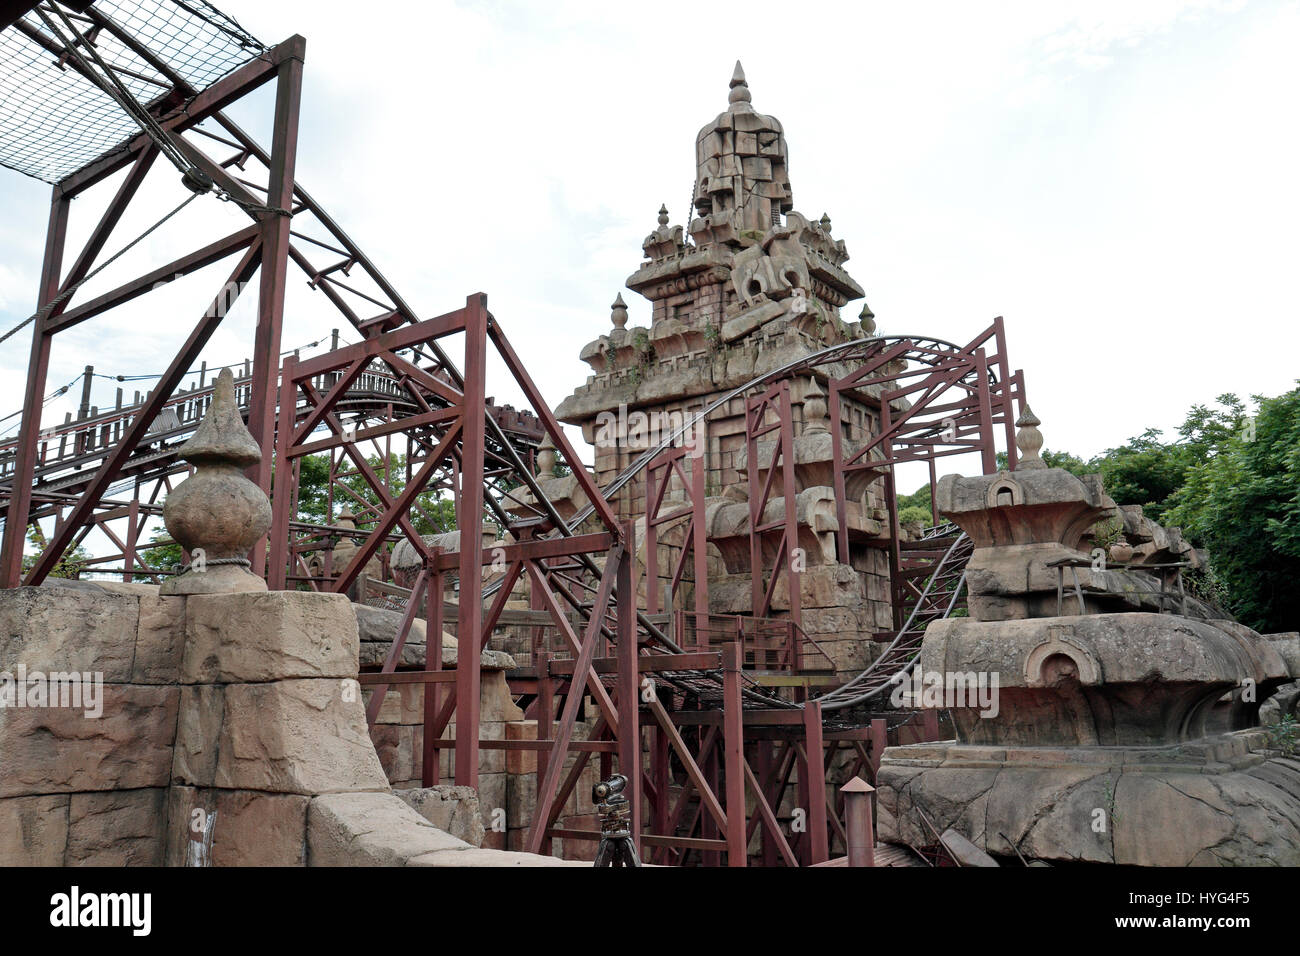 The Indiana Jones and the Temple of Peril, Disneyland Paris, Marne-la-Vallée, near Paris, France. Stock Photo